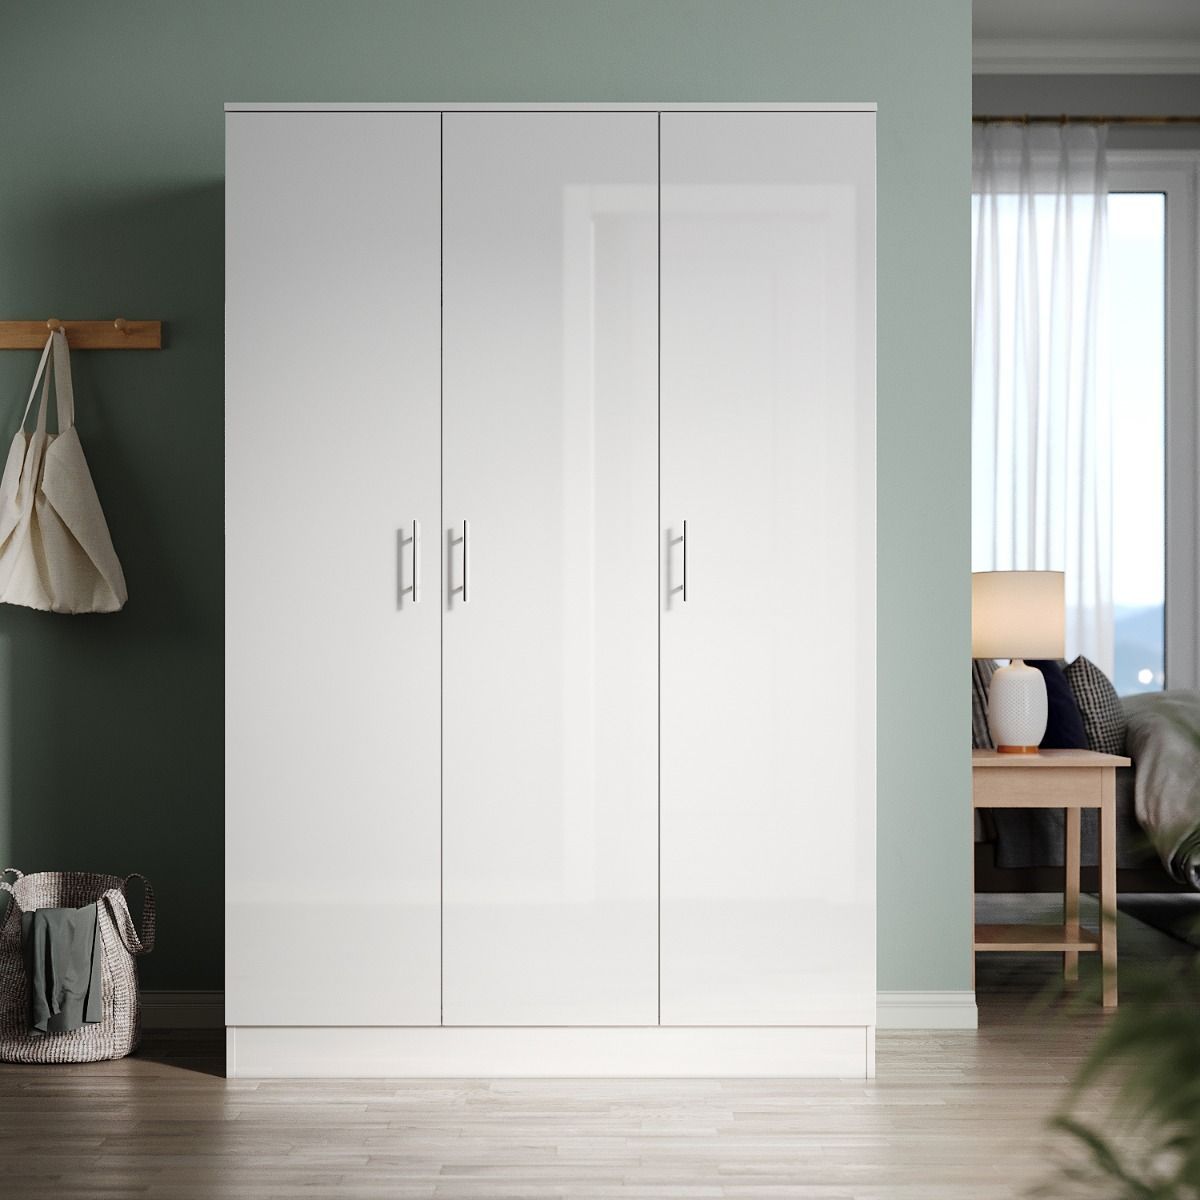 Elegant 3 Door Triple Wardrobe White Gloss With Hanging Rail & Shelves  Bedroom Furniture Regarding Triple Mirrored Wardrobes (View 11 of 15)